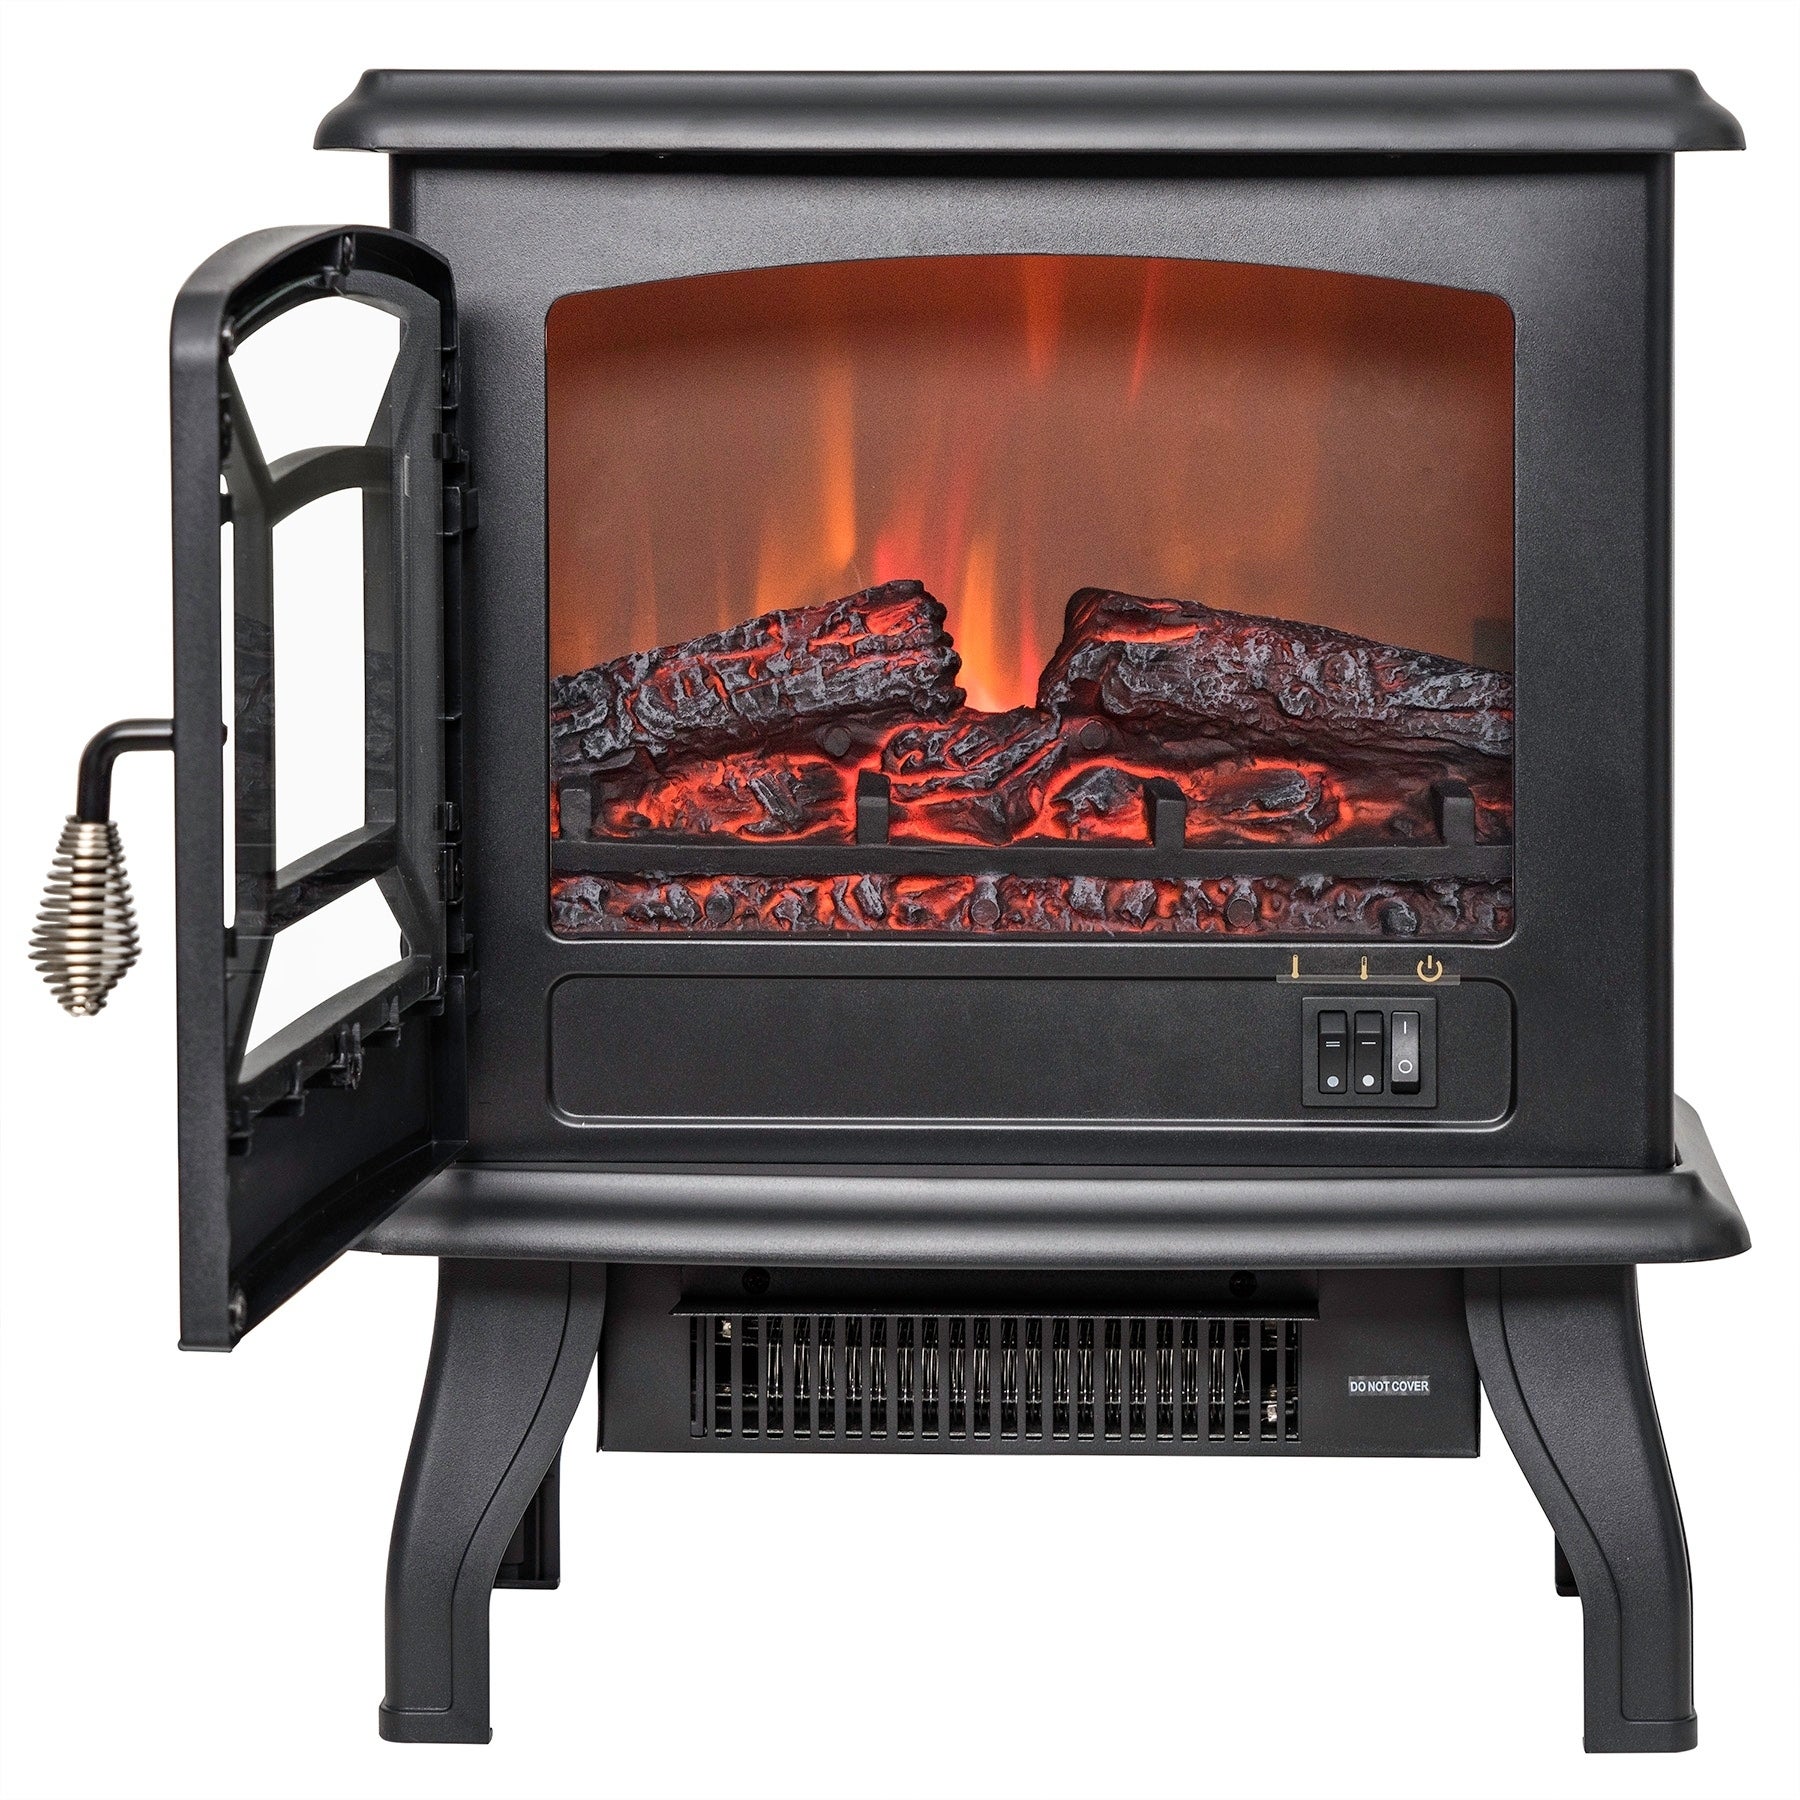 AKDY FP0078 17 Freestanding Portable Electric Fireplace 3D Flames Firebox w Logs Heater dc77dae8 f820 4899 b286 bbe353eb8030